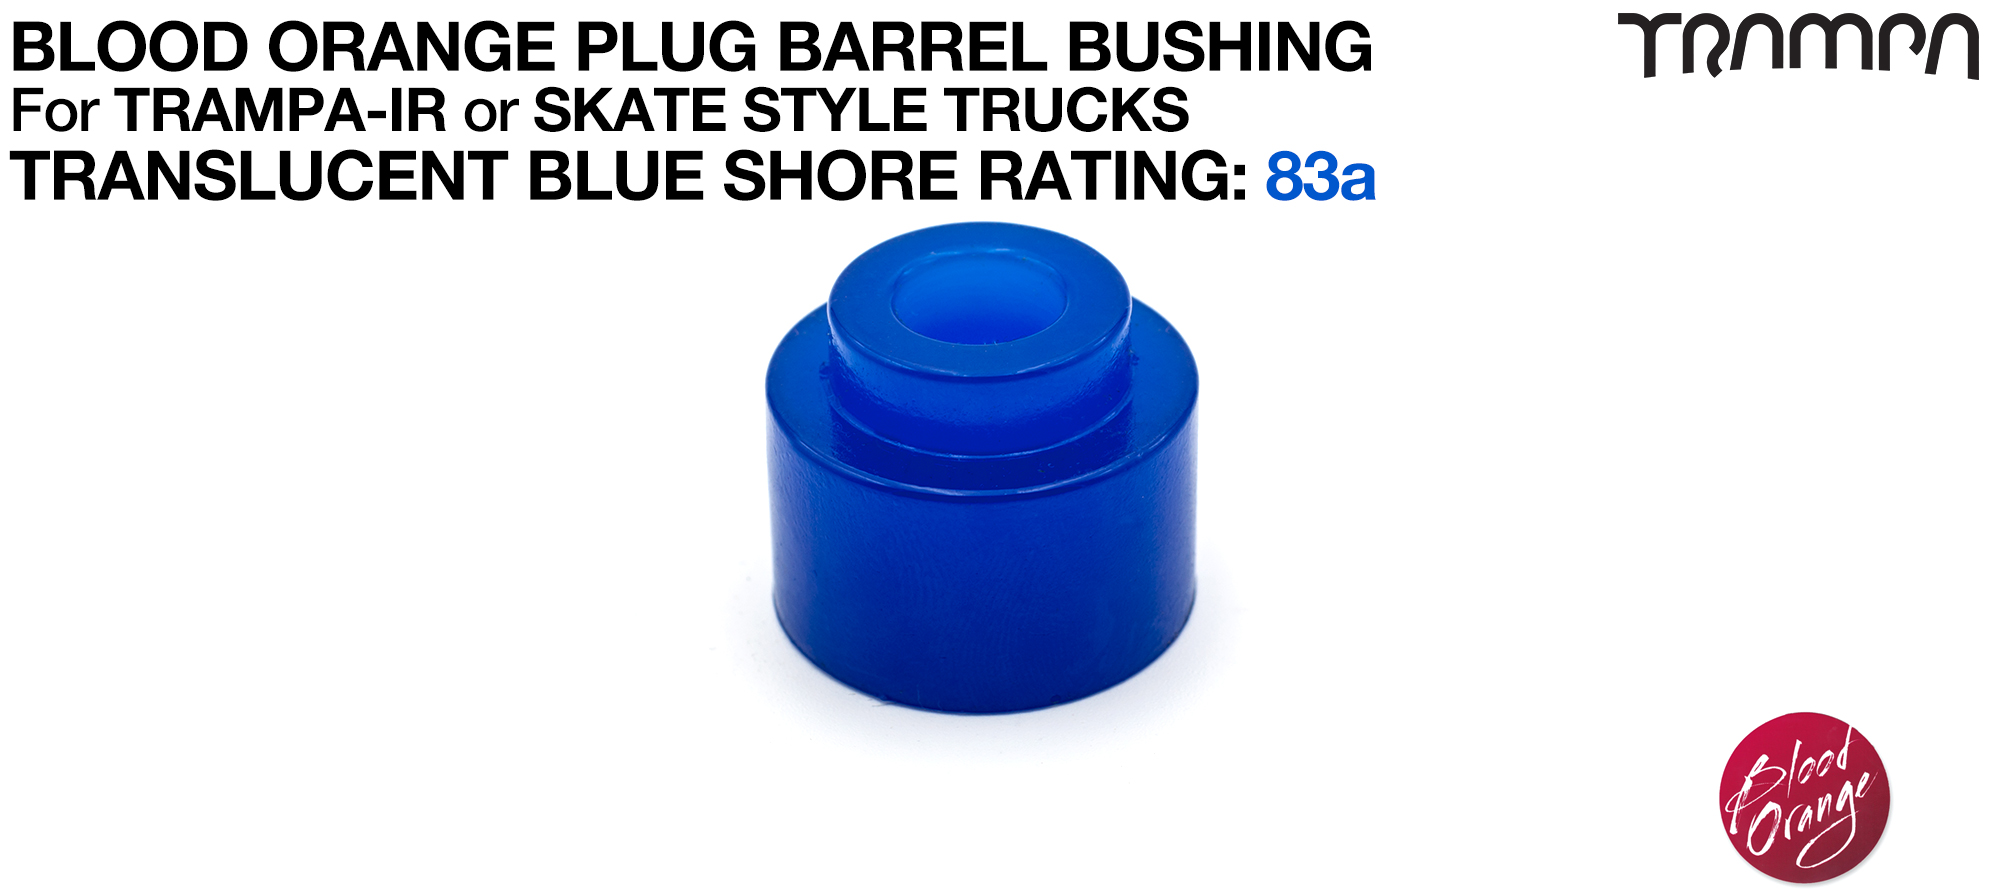 Blood Orange PLUG BARREL - TRANSLUCENT BLUE 83a